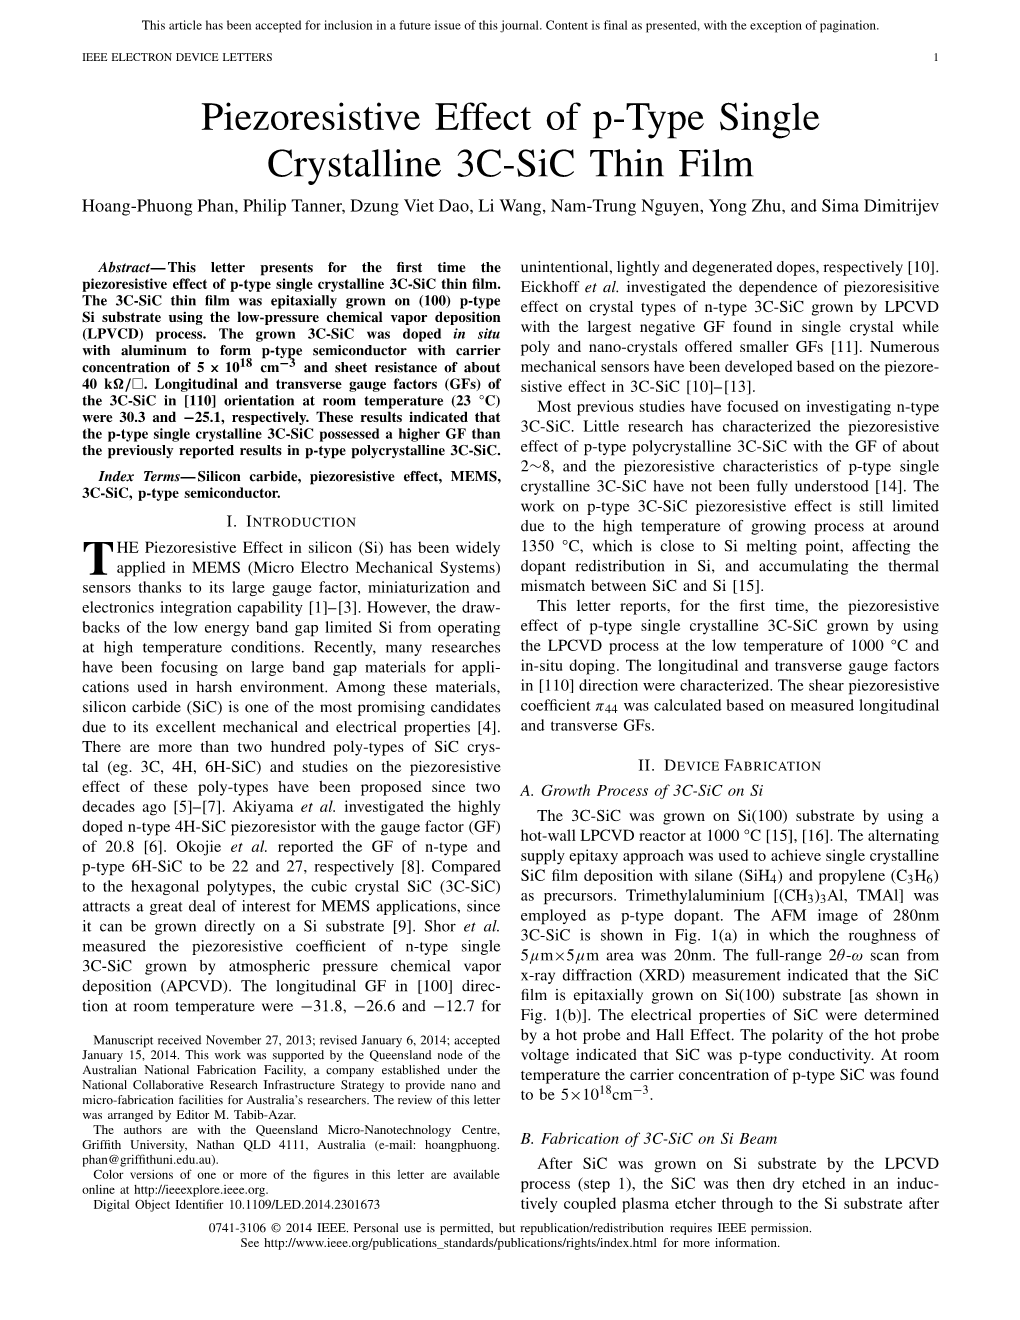 Piezoresistive Effect of P-Type Single Crystalline 3C-Sic Thin Film